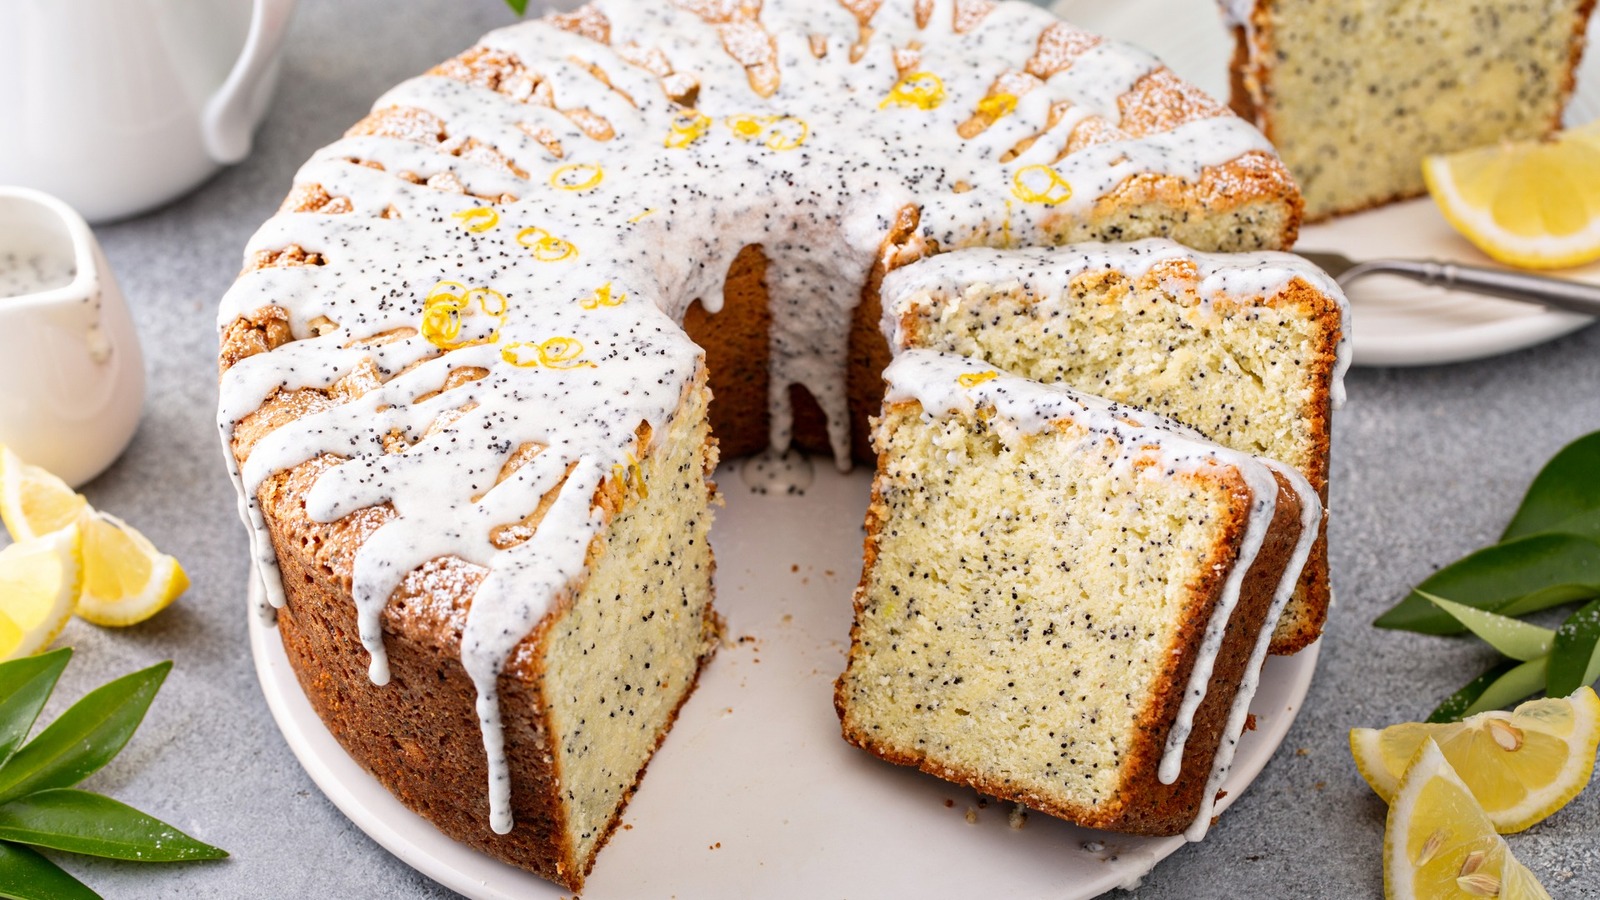 Easy Lemon Loaf Cake - Ina Garten recipe adaption